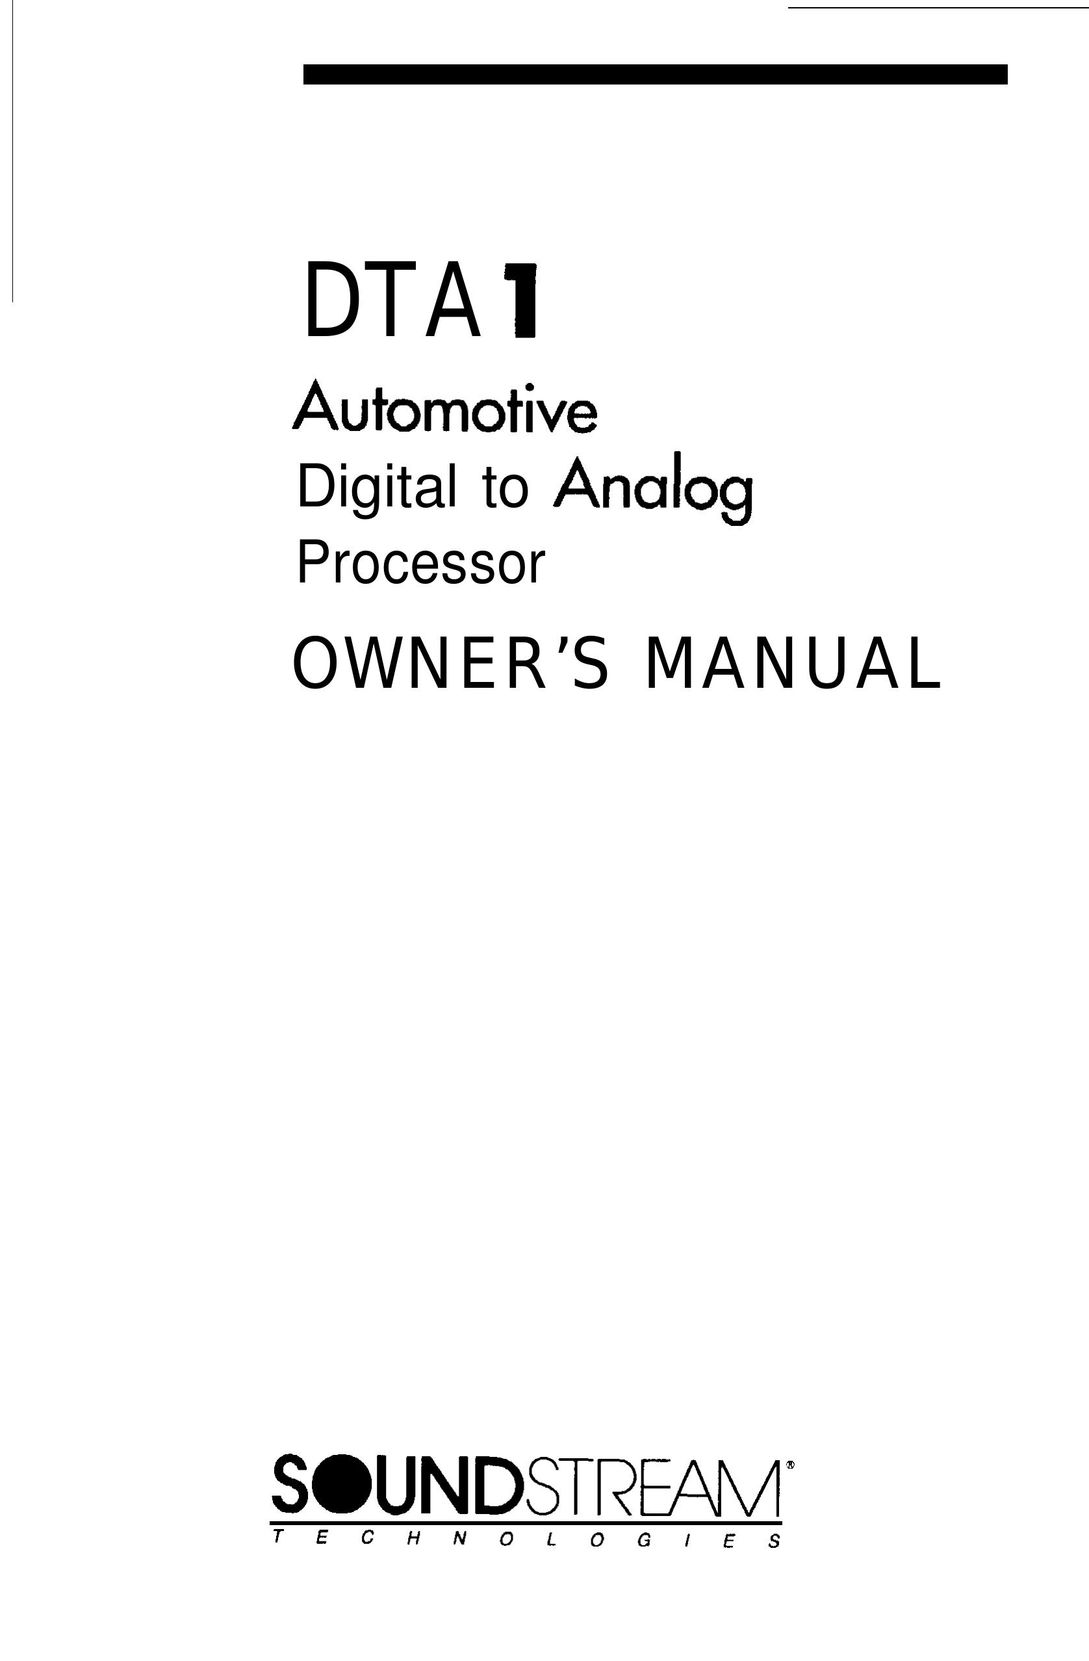 Soundstream Technologies DTA 1 Car Speaker User Manual